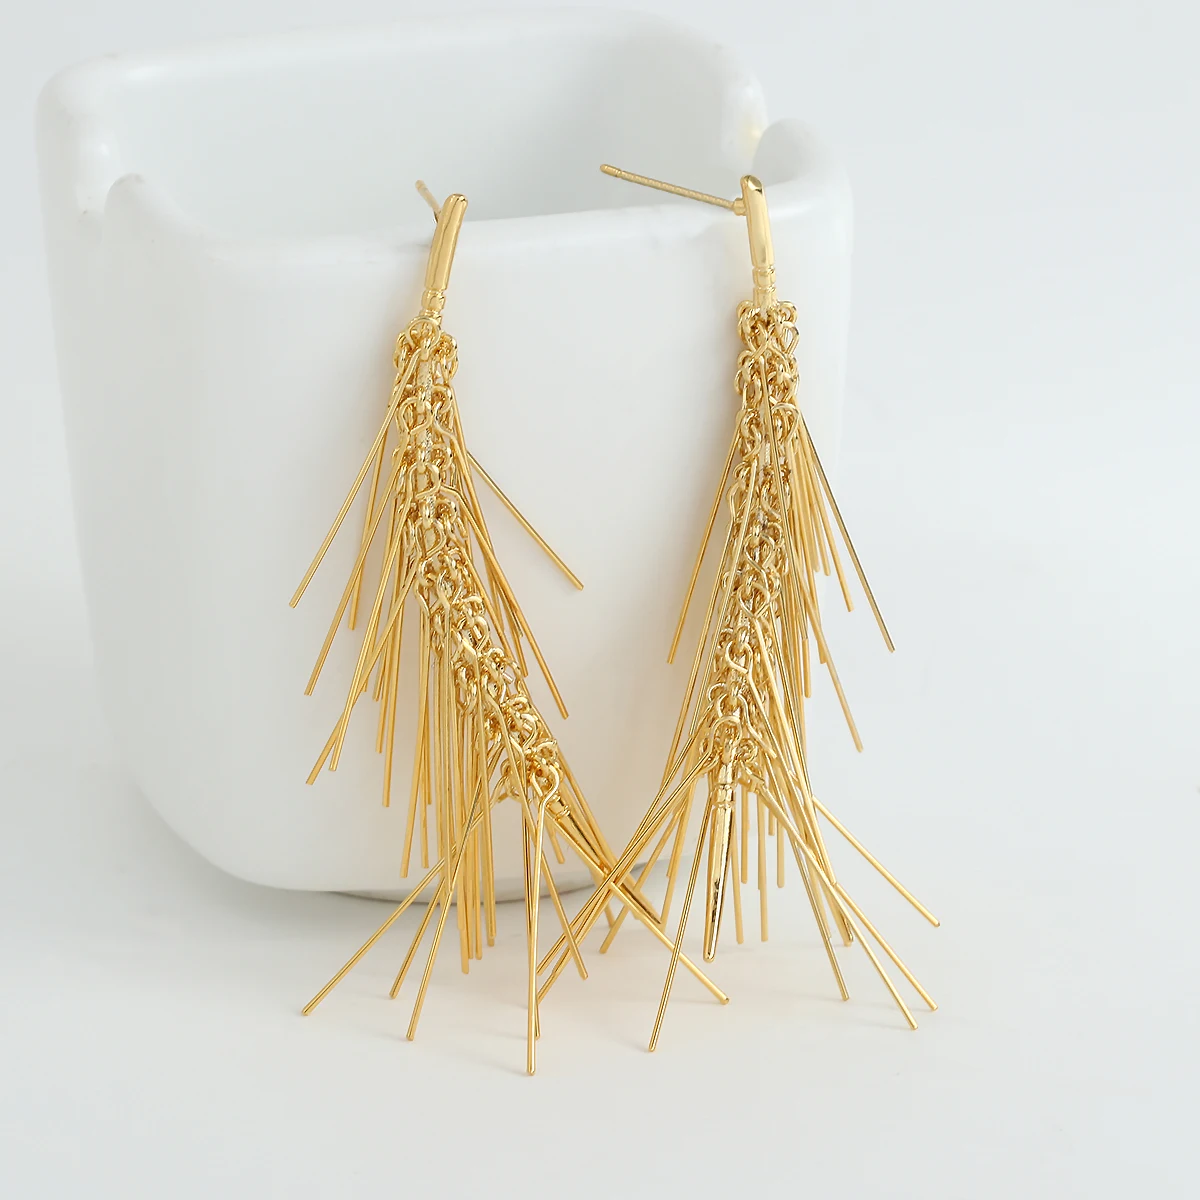 Korea New Design Fashion Jewelry Golden Metal Ball Pendant Tassel Earrings  Elegant Women's Daily Work Matching Accessories